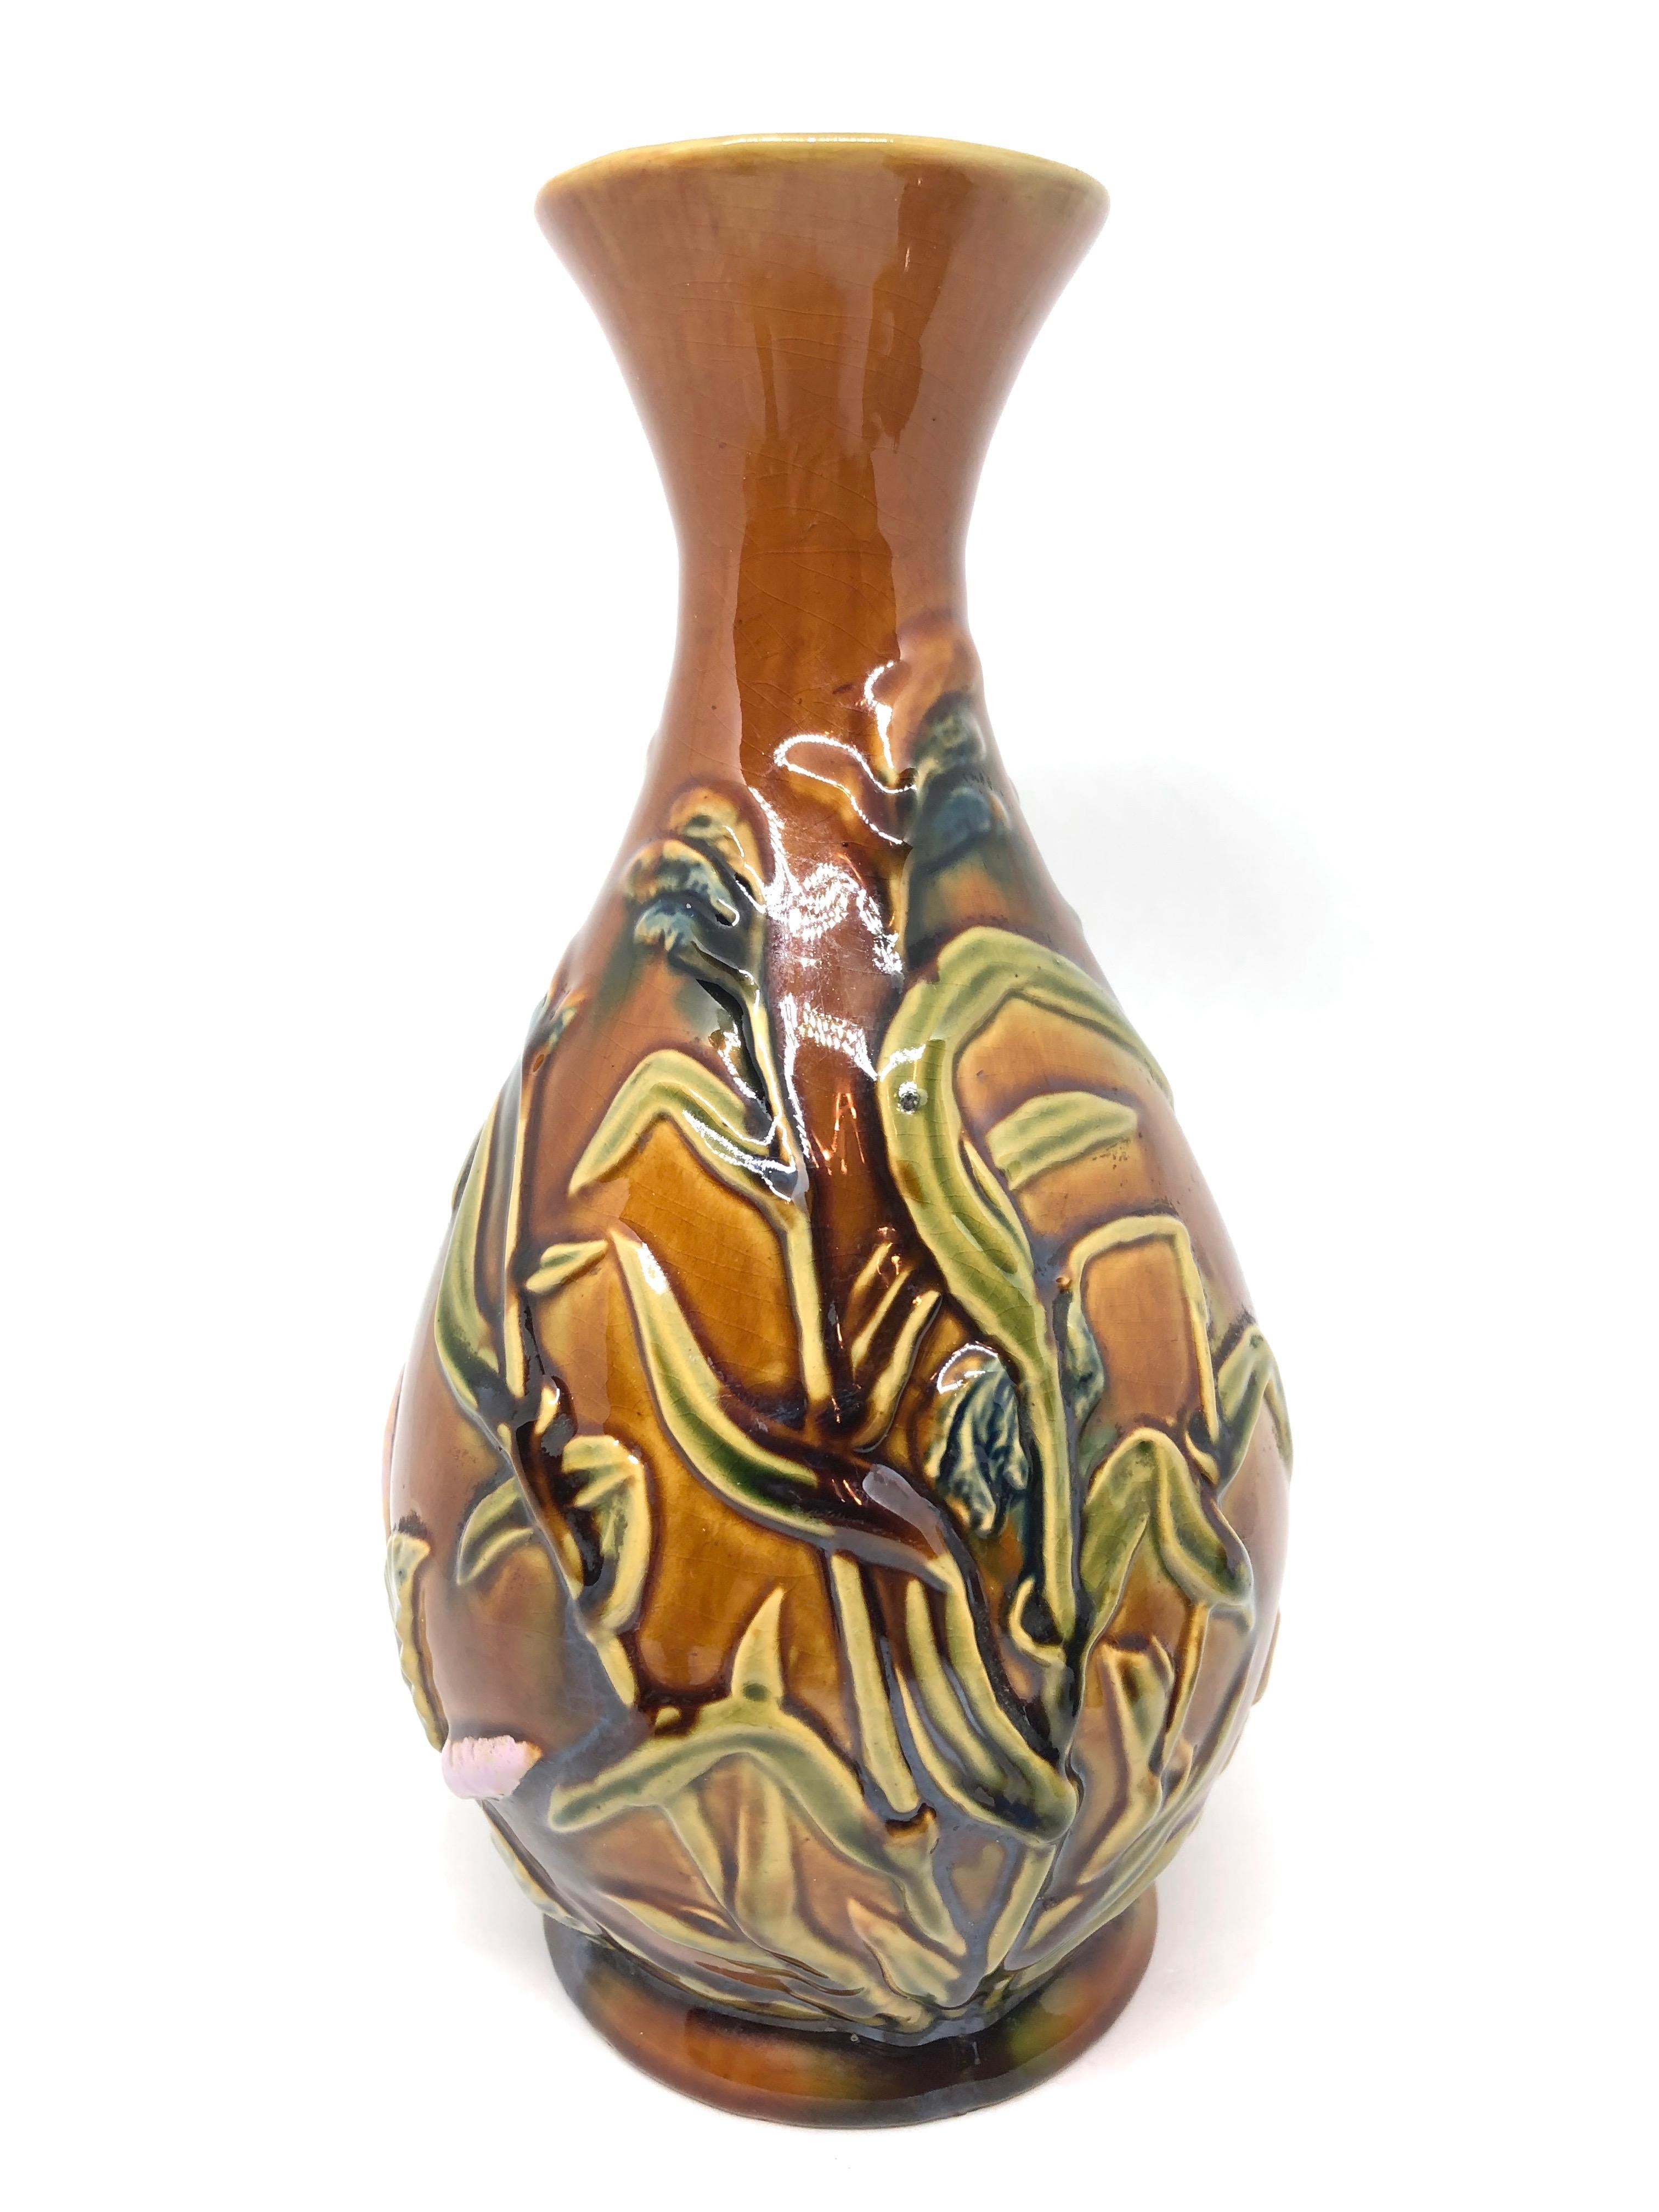 Art Nouveau Majolica Vase with Canebrake Reeds and a Duck, circa 1900 (Art nouveau)